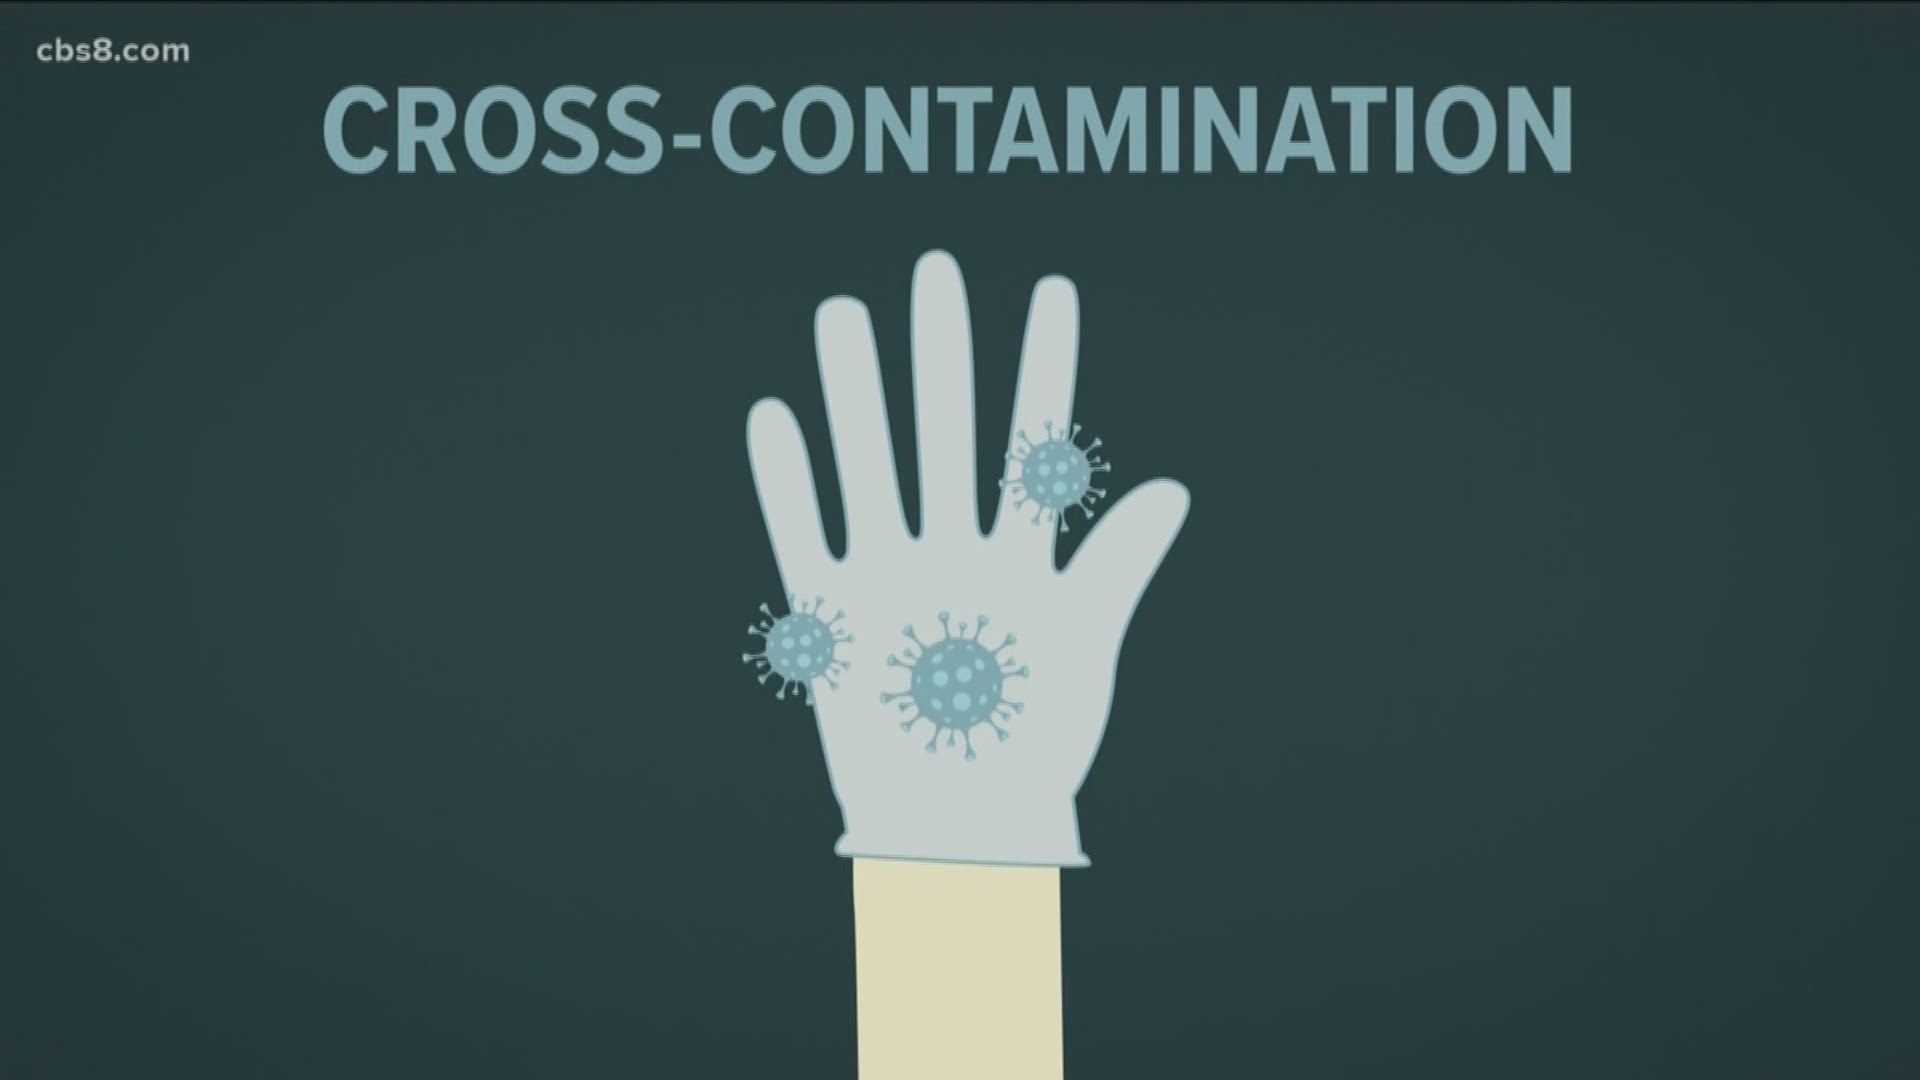 Marcella Lee breaks down the use of gloves to prevent spreading coronavirus/COVID-19